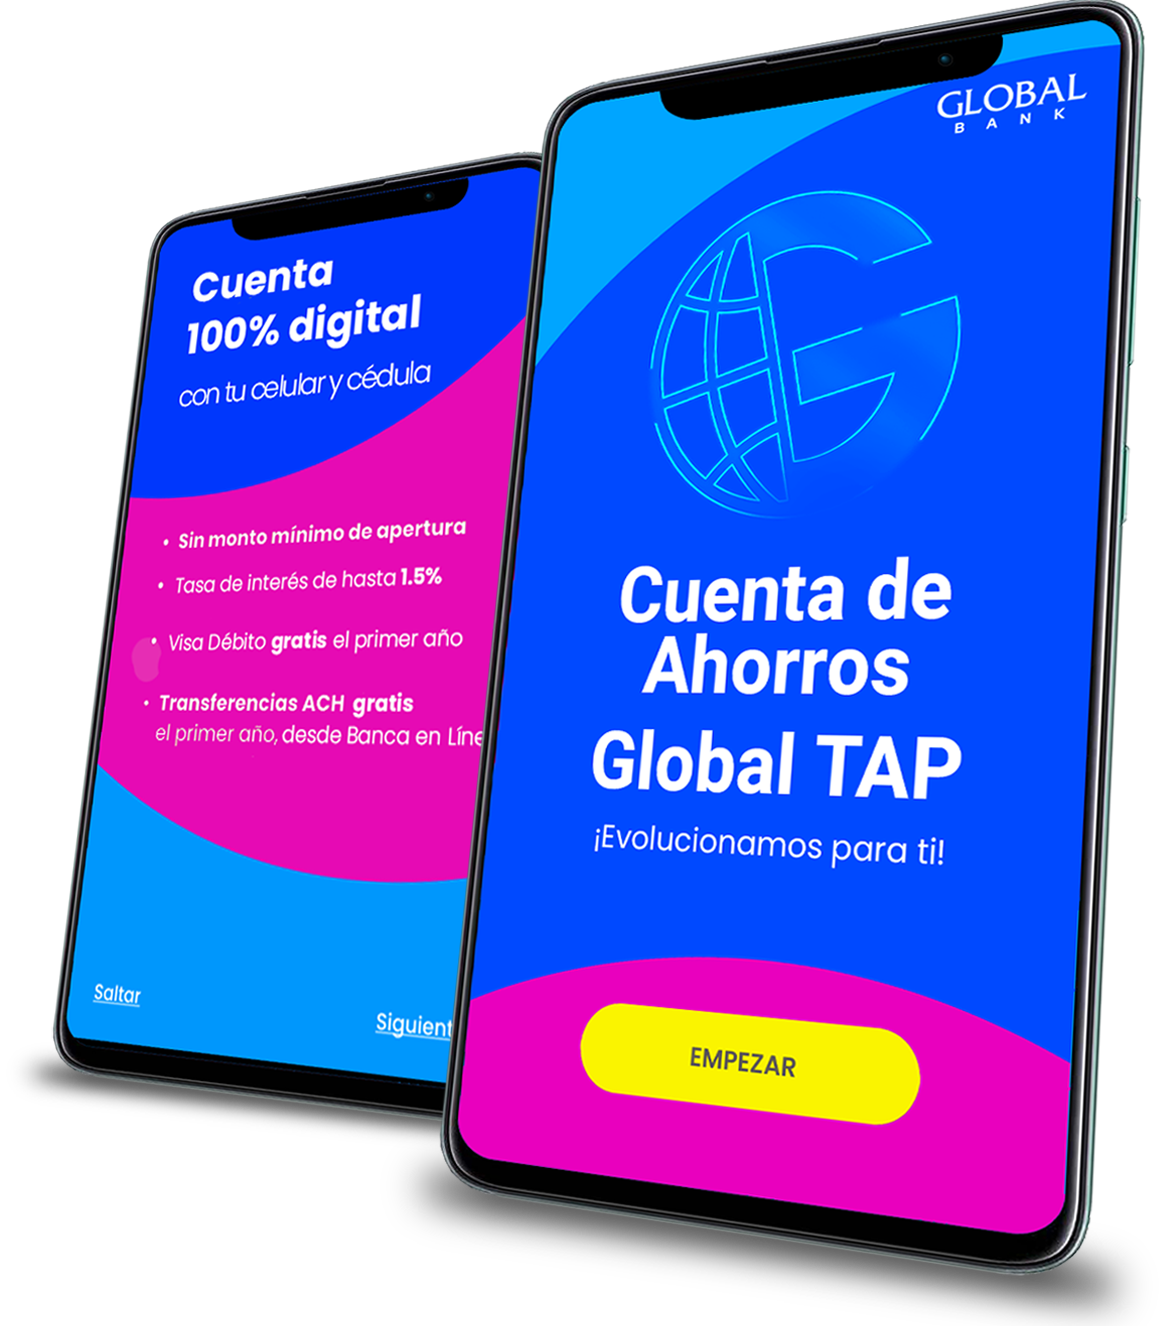 Cuenta de Ahorros Global TAP